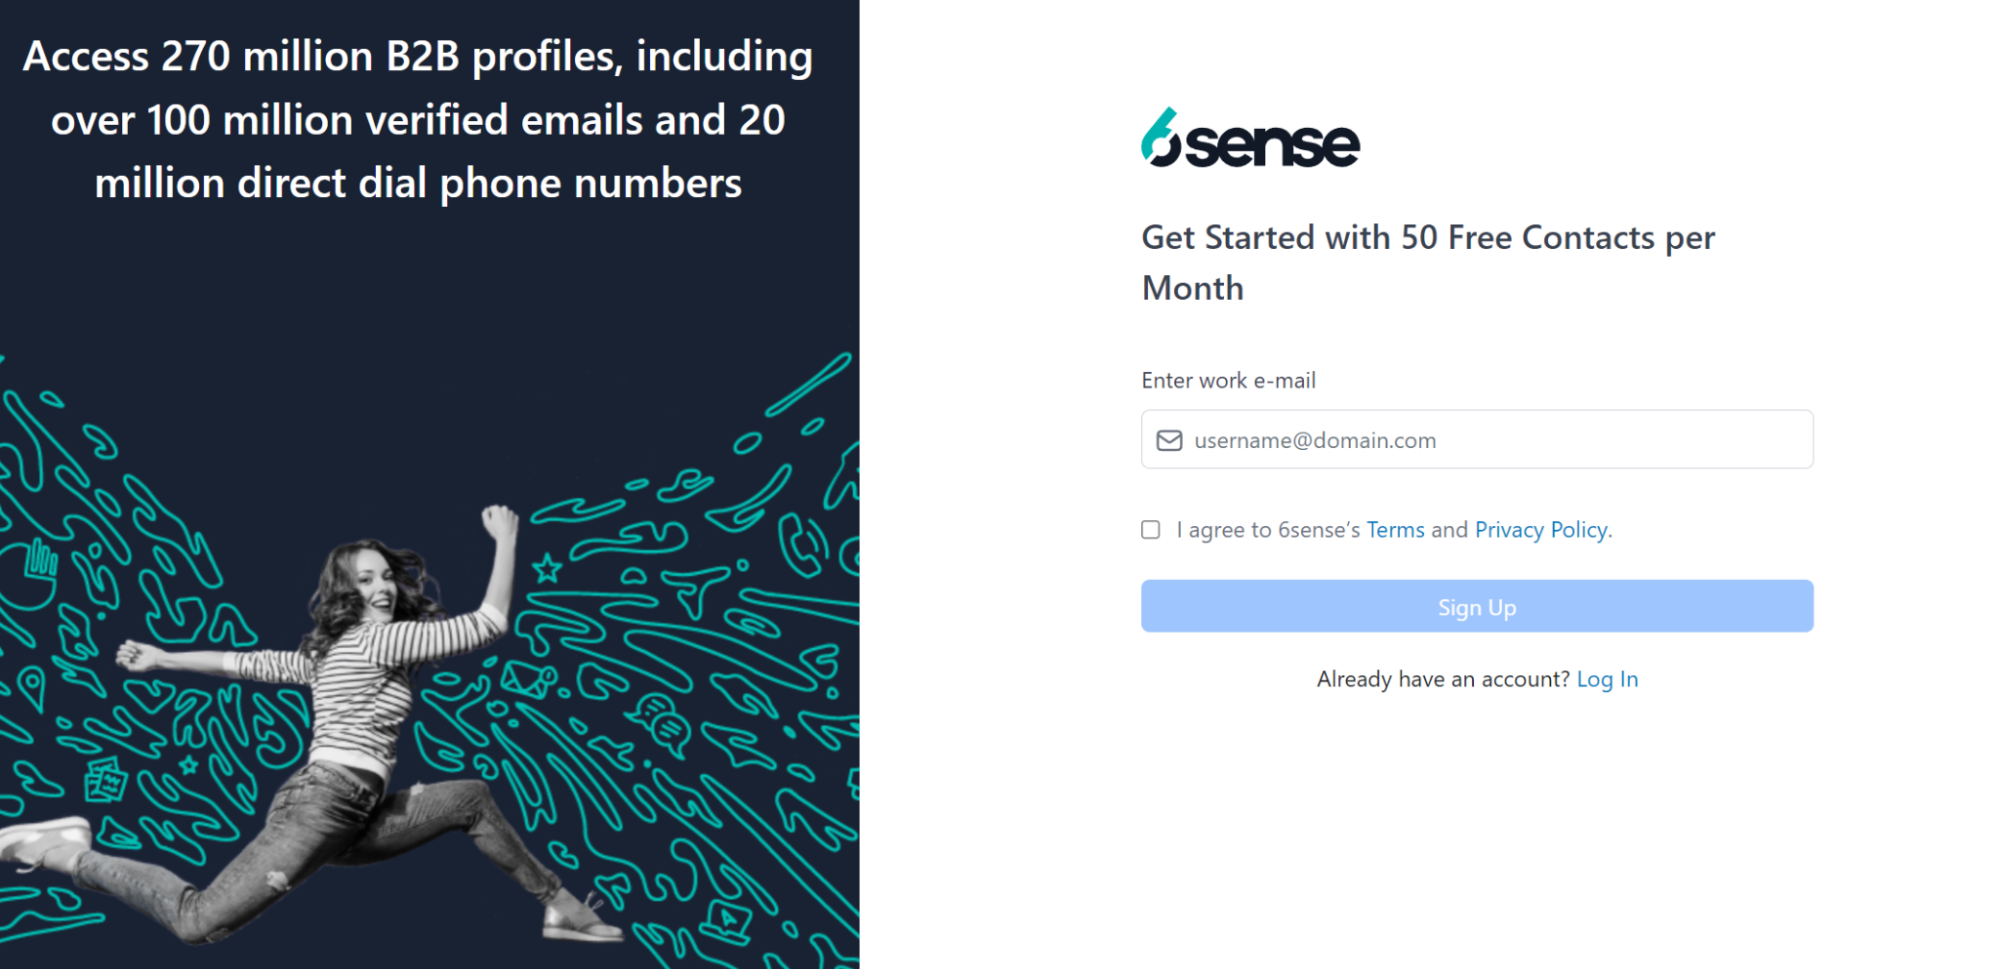 6Sense company page CTAs take visitors to this freemium offering.